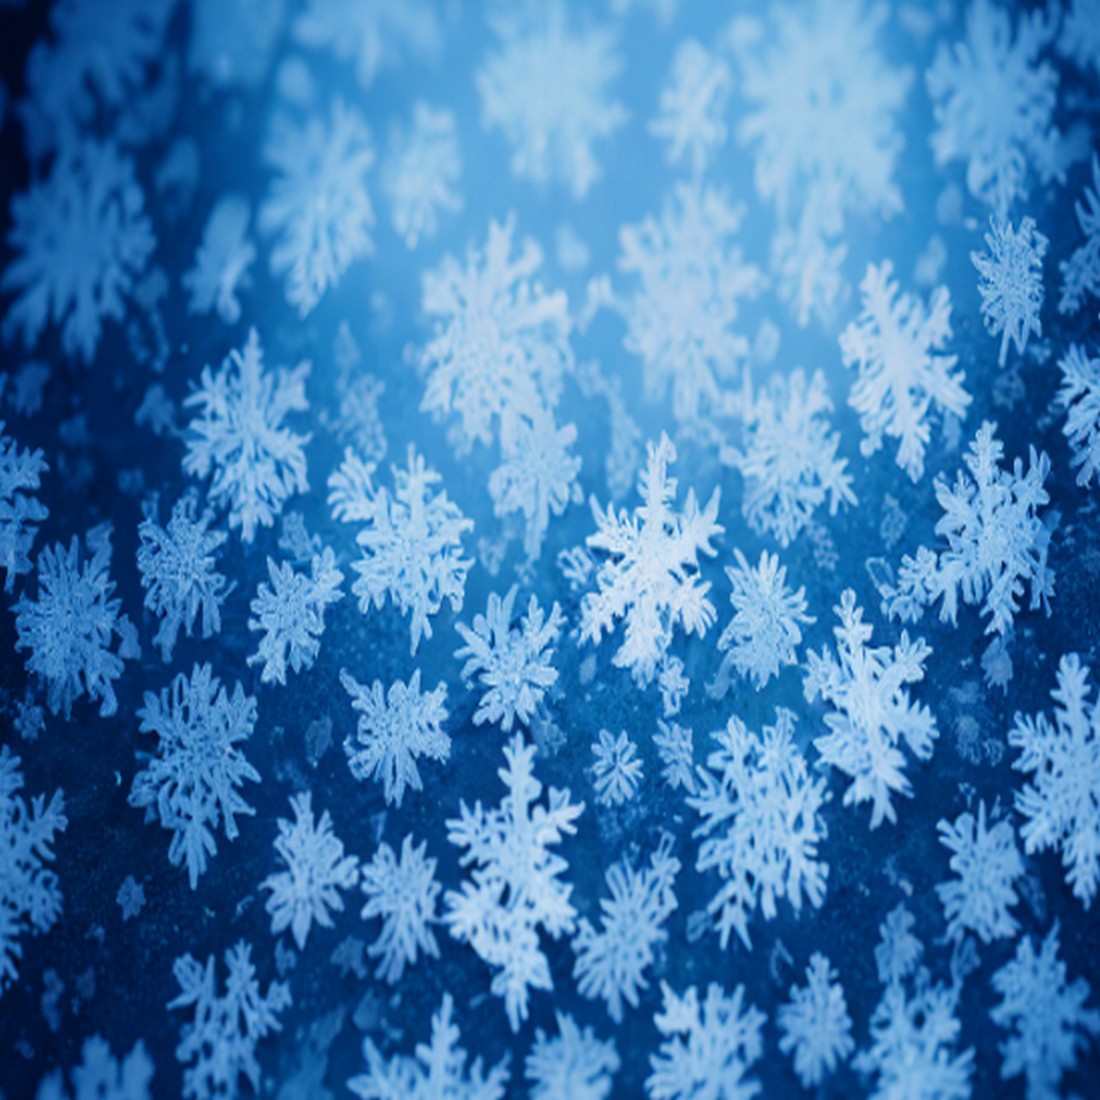 blue snow flakes background texture1 124